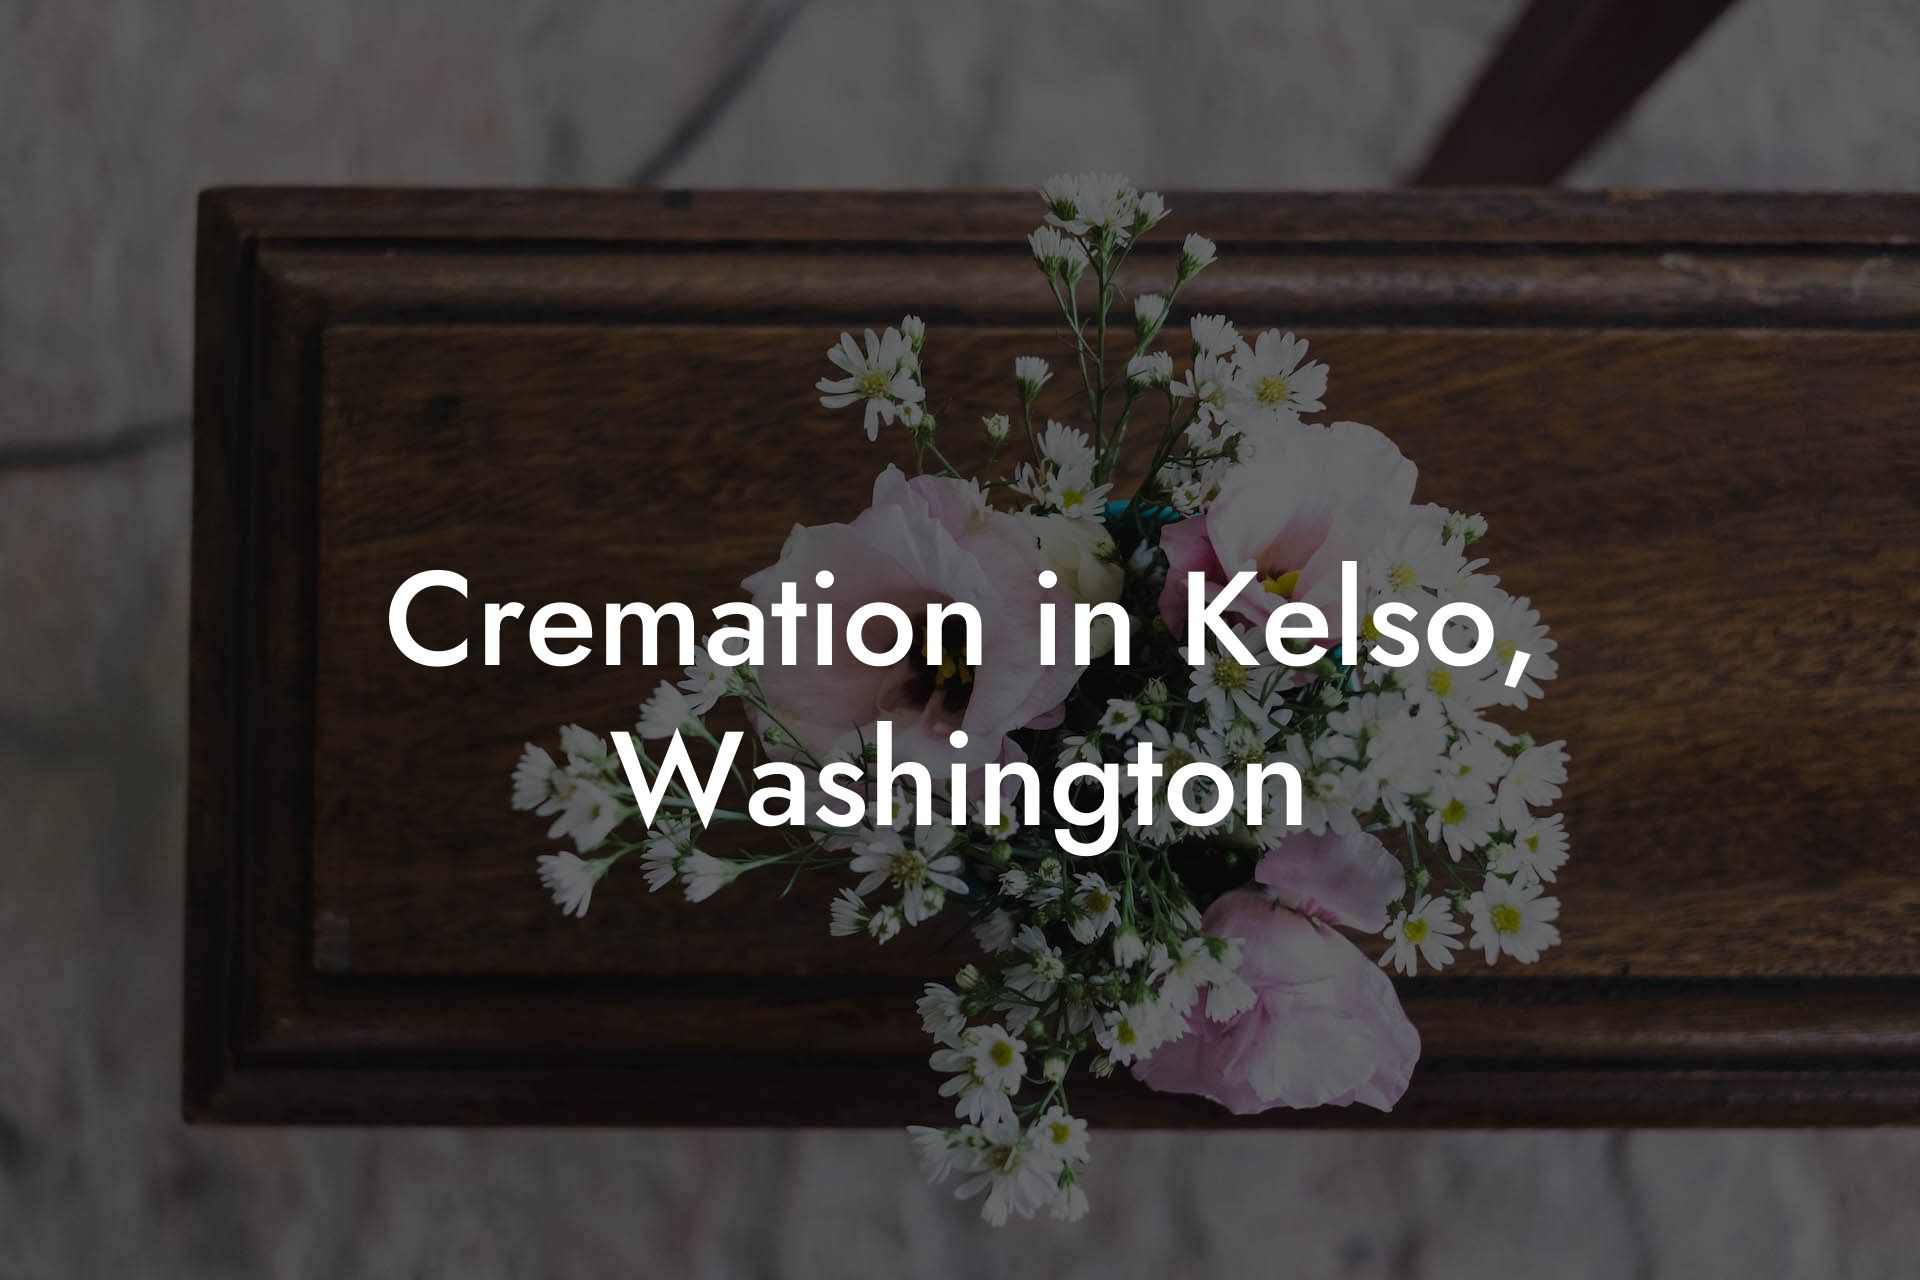 Cremation in Kelso, Washington